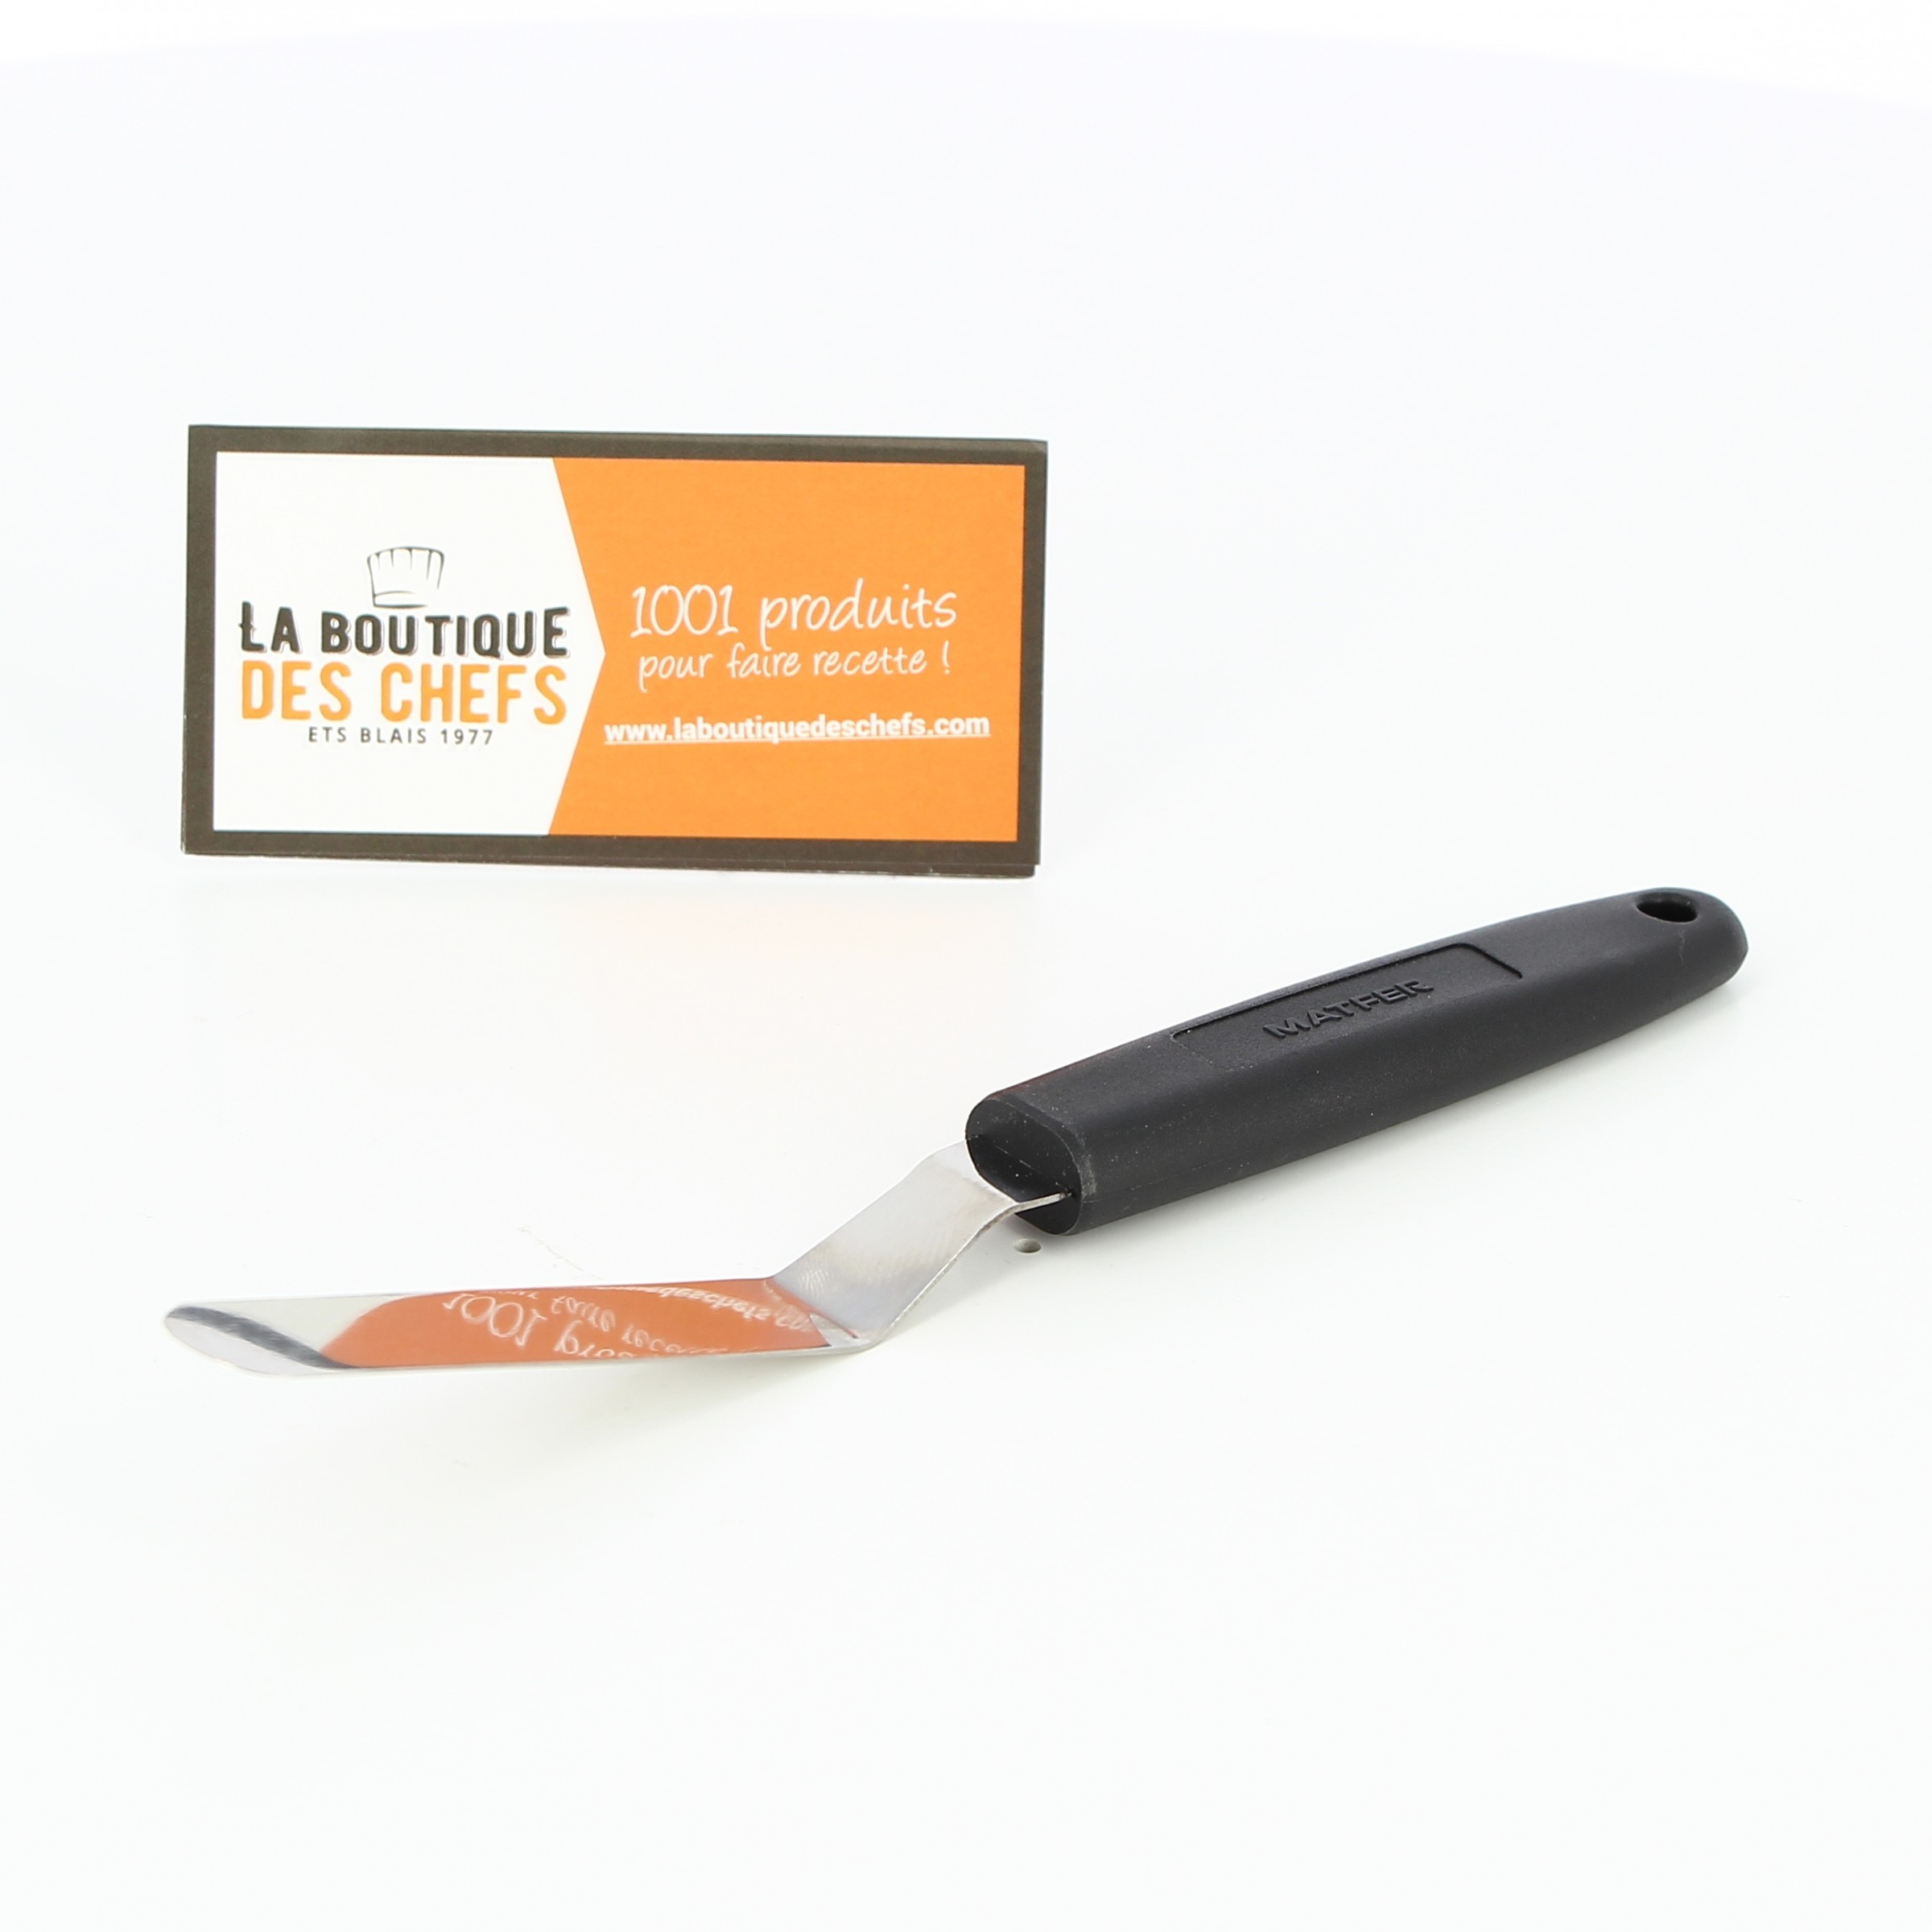 Mini spatule coudée 22,5cm fm professional - RETIF